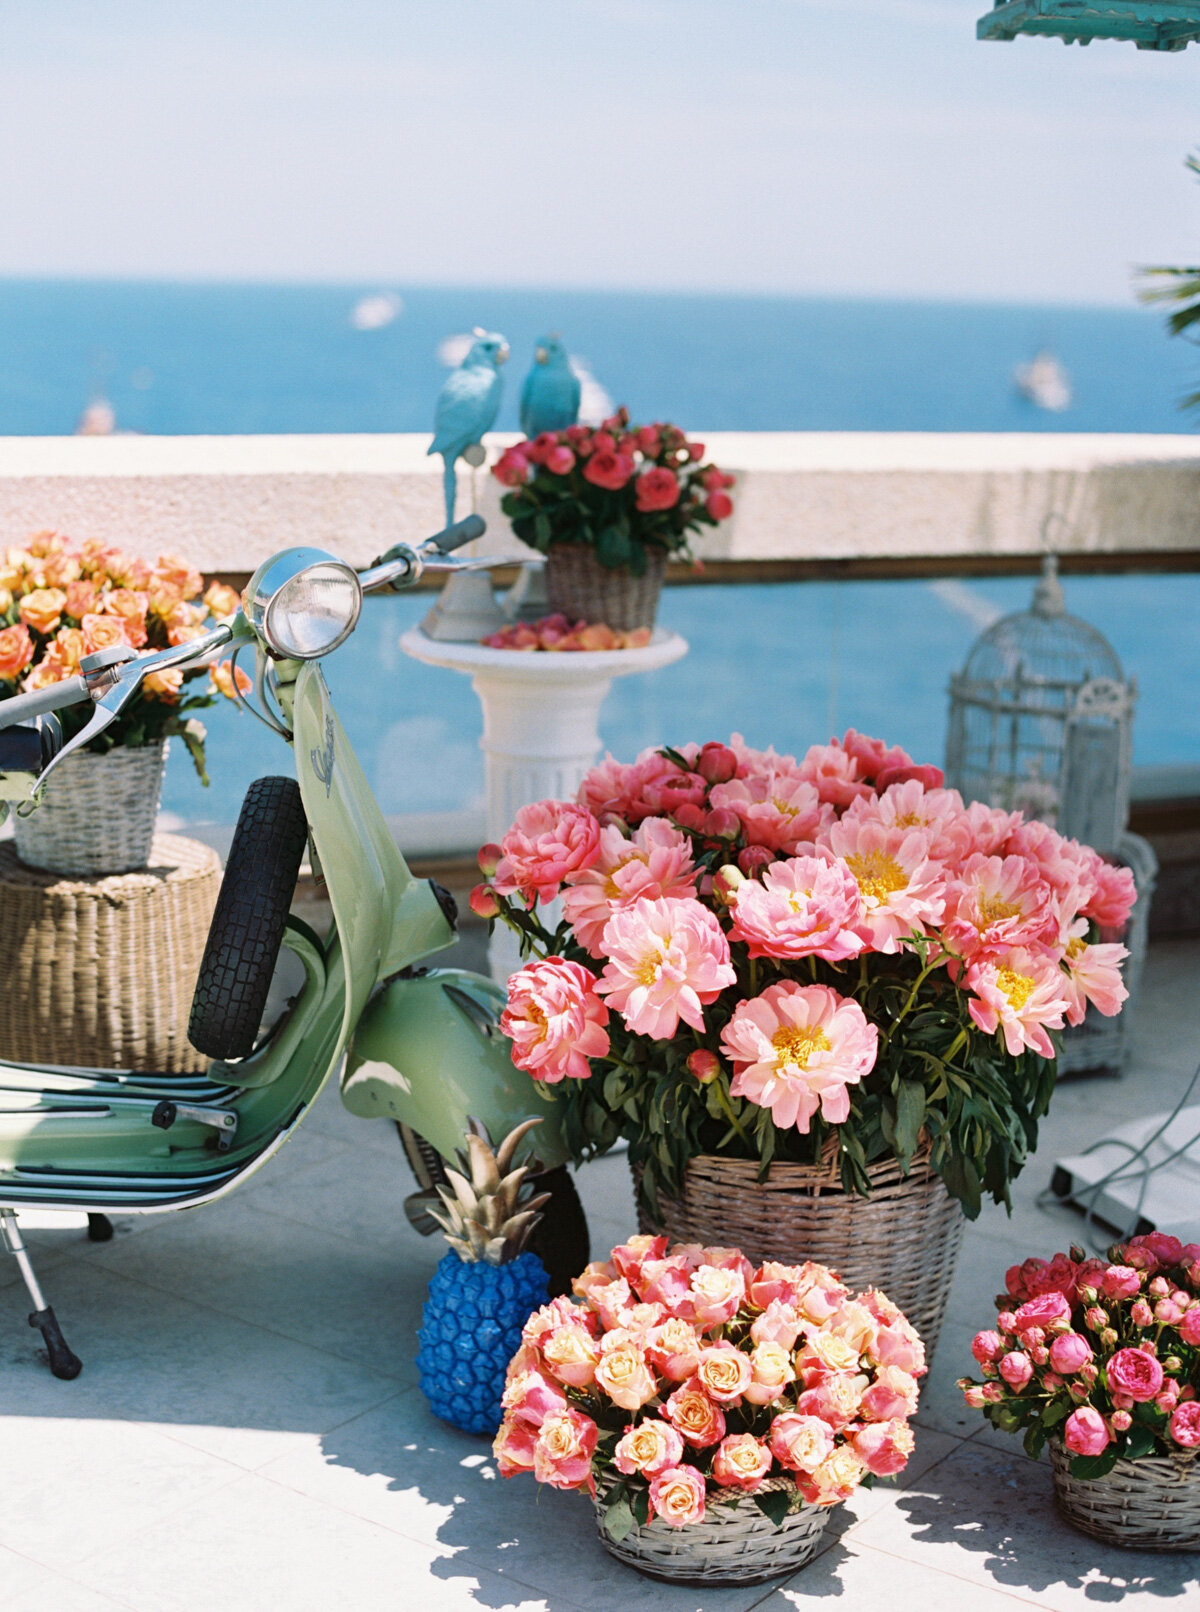 Nikki-Beach-Club-Pool-Monaco-Nice-Saint Tropez-Welcome-Dinner-Katie-Grant-destination-wedding (1 of 22).jpg